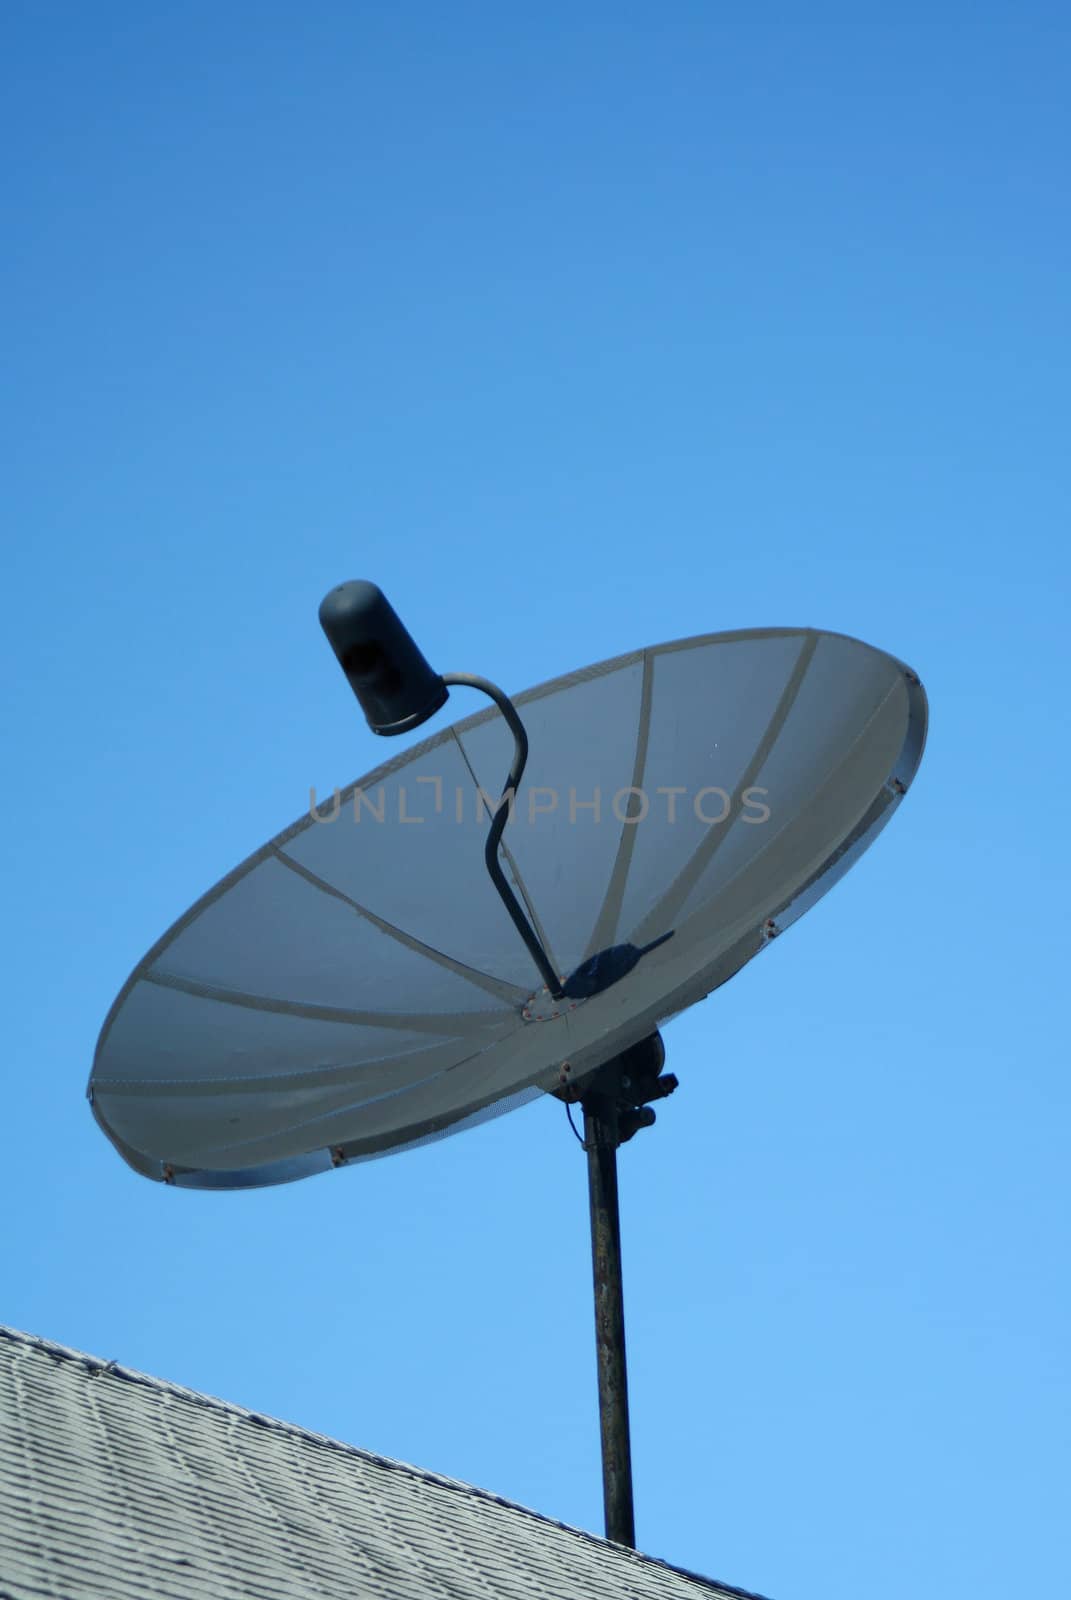 A Black satellite dish against a blue sky